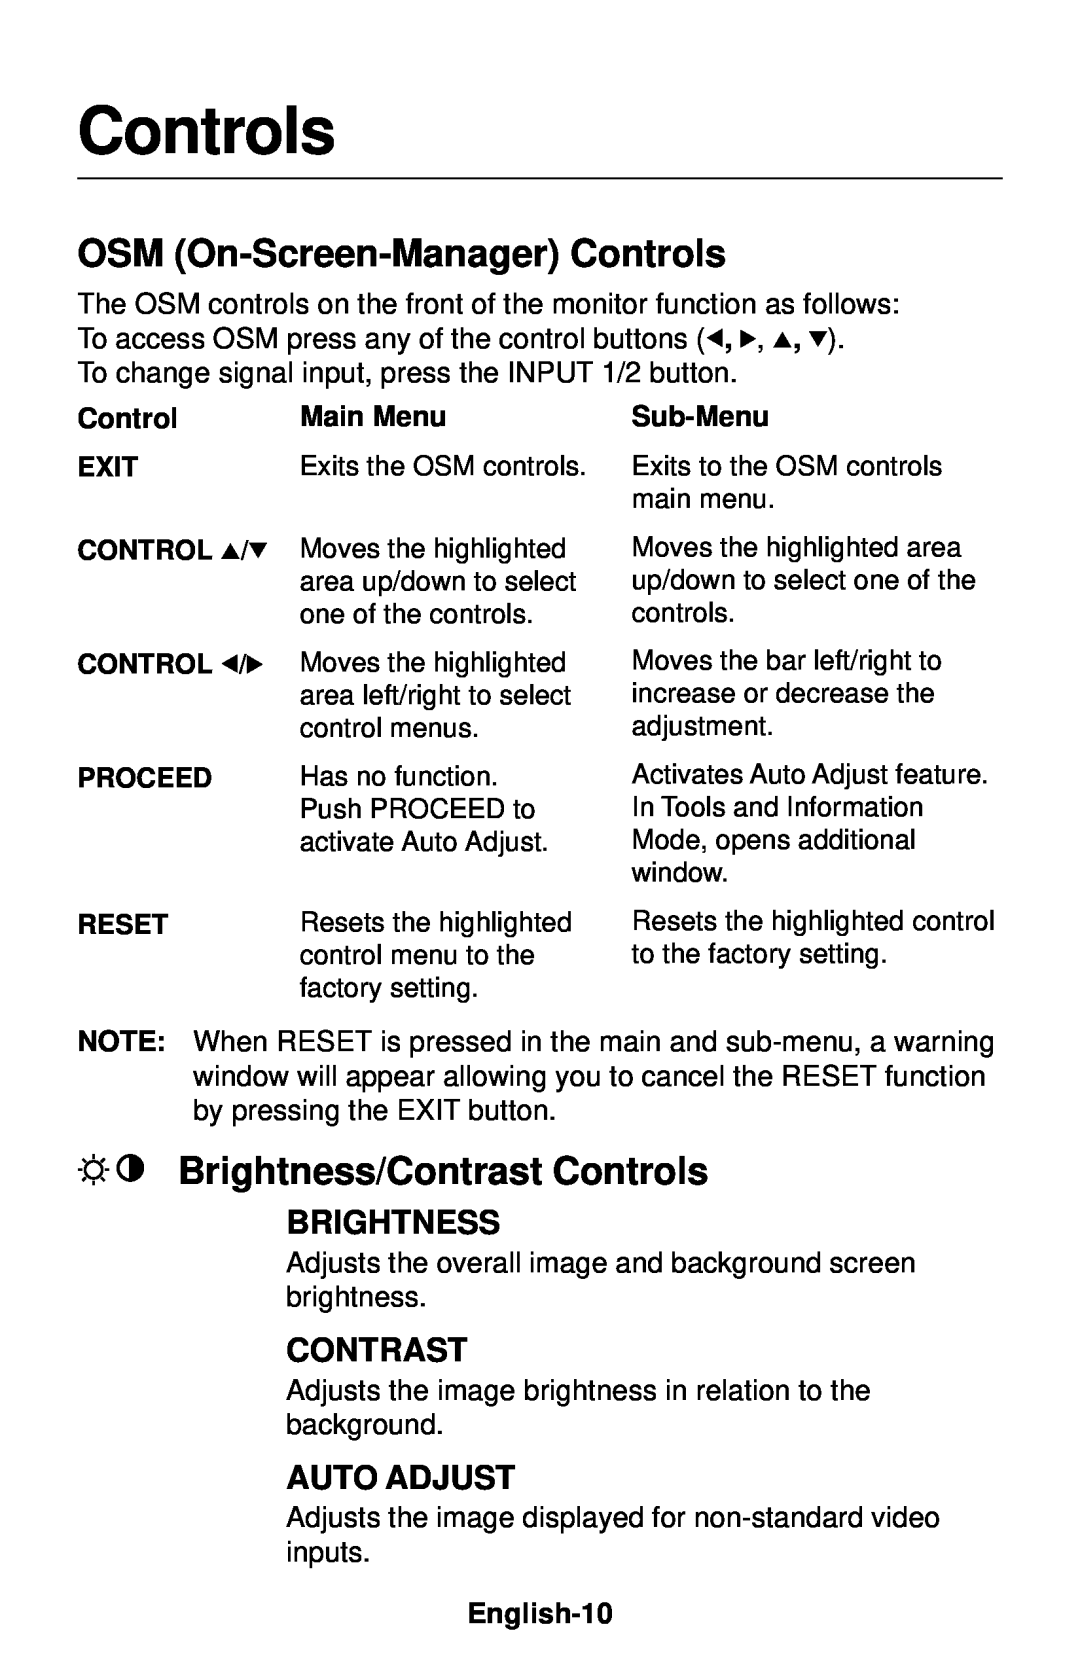 NEC LCD1830 user manual OSM On-Screen-Manager Controls, Brightness/Contrast Controls, Auto Adjust 